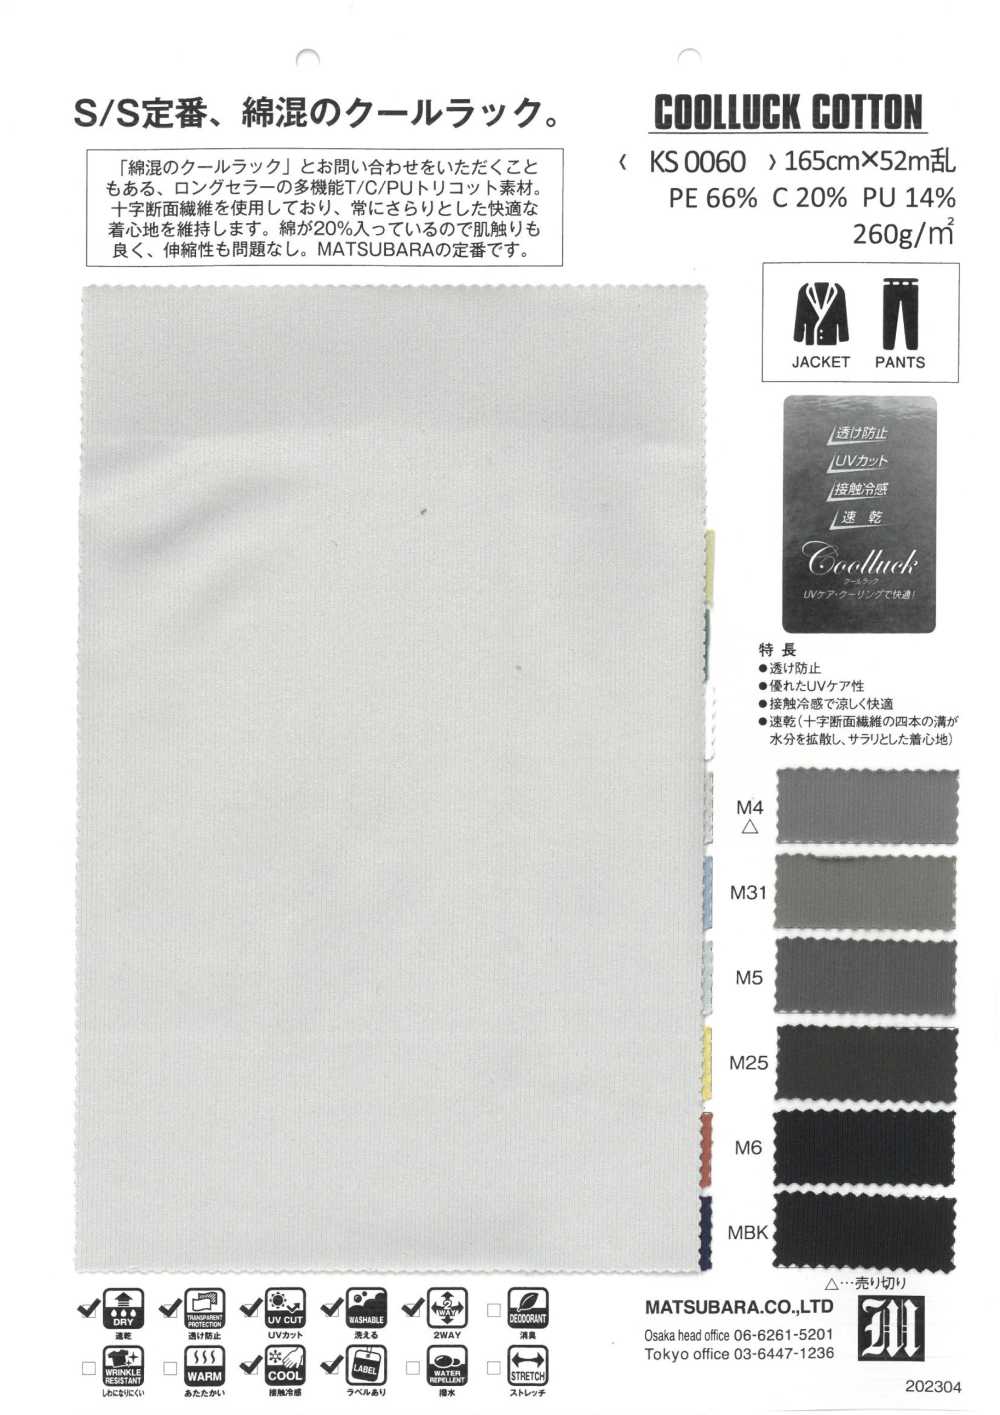 KS0060 COOLLUCK-BAUMWOLLE[Textilgewebe] Matsubara